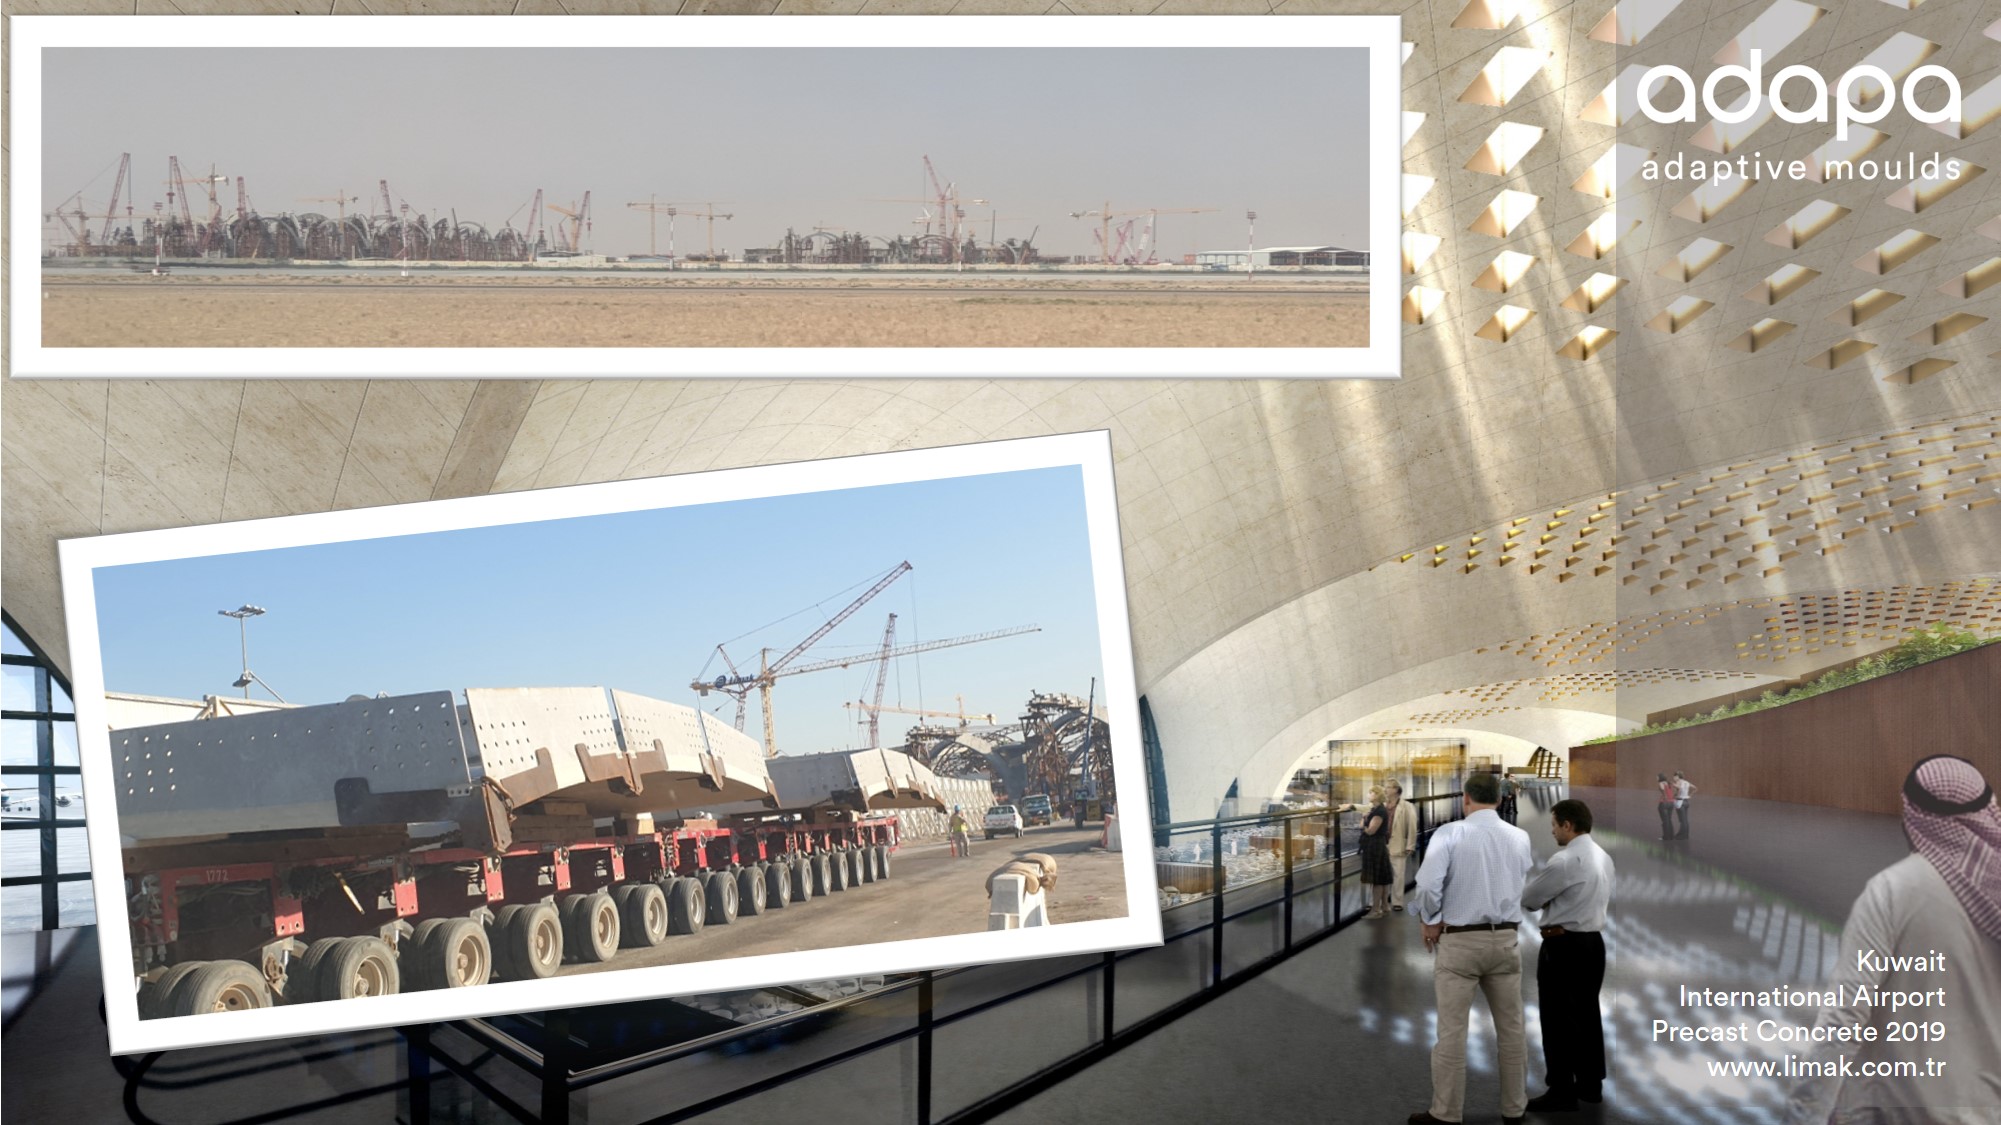 Kuwait International Airport Precast Concrete 2019